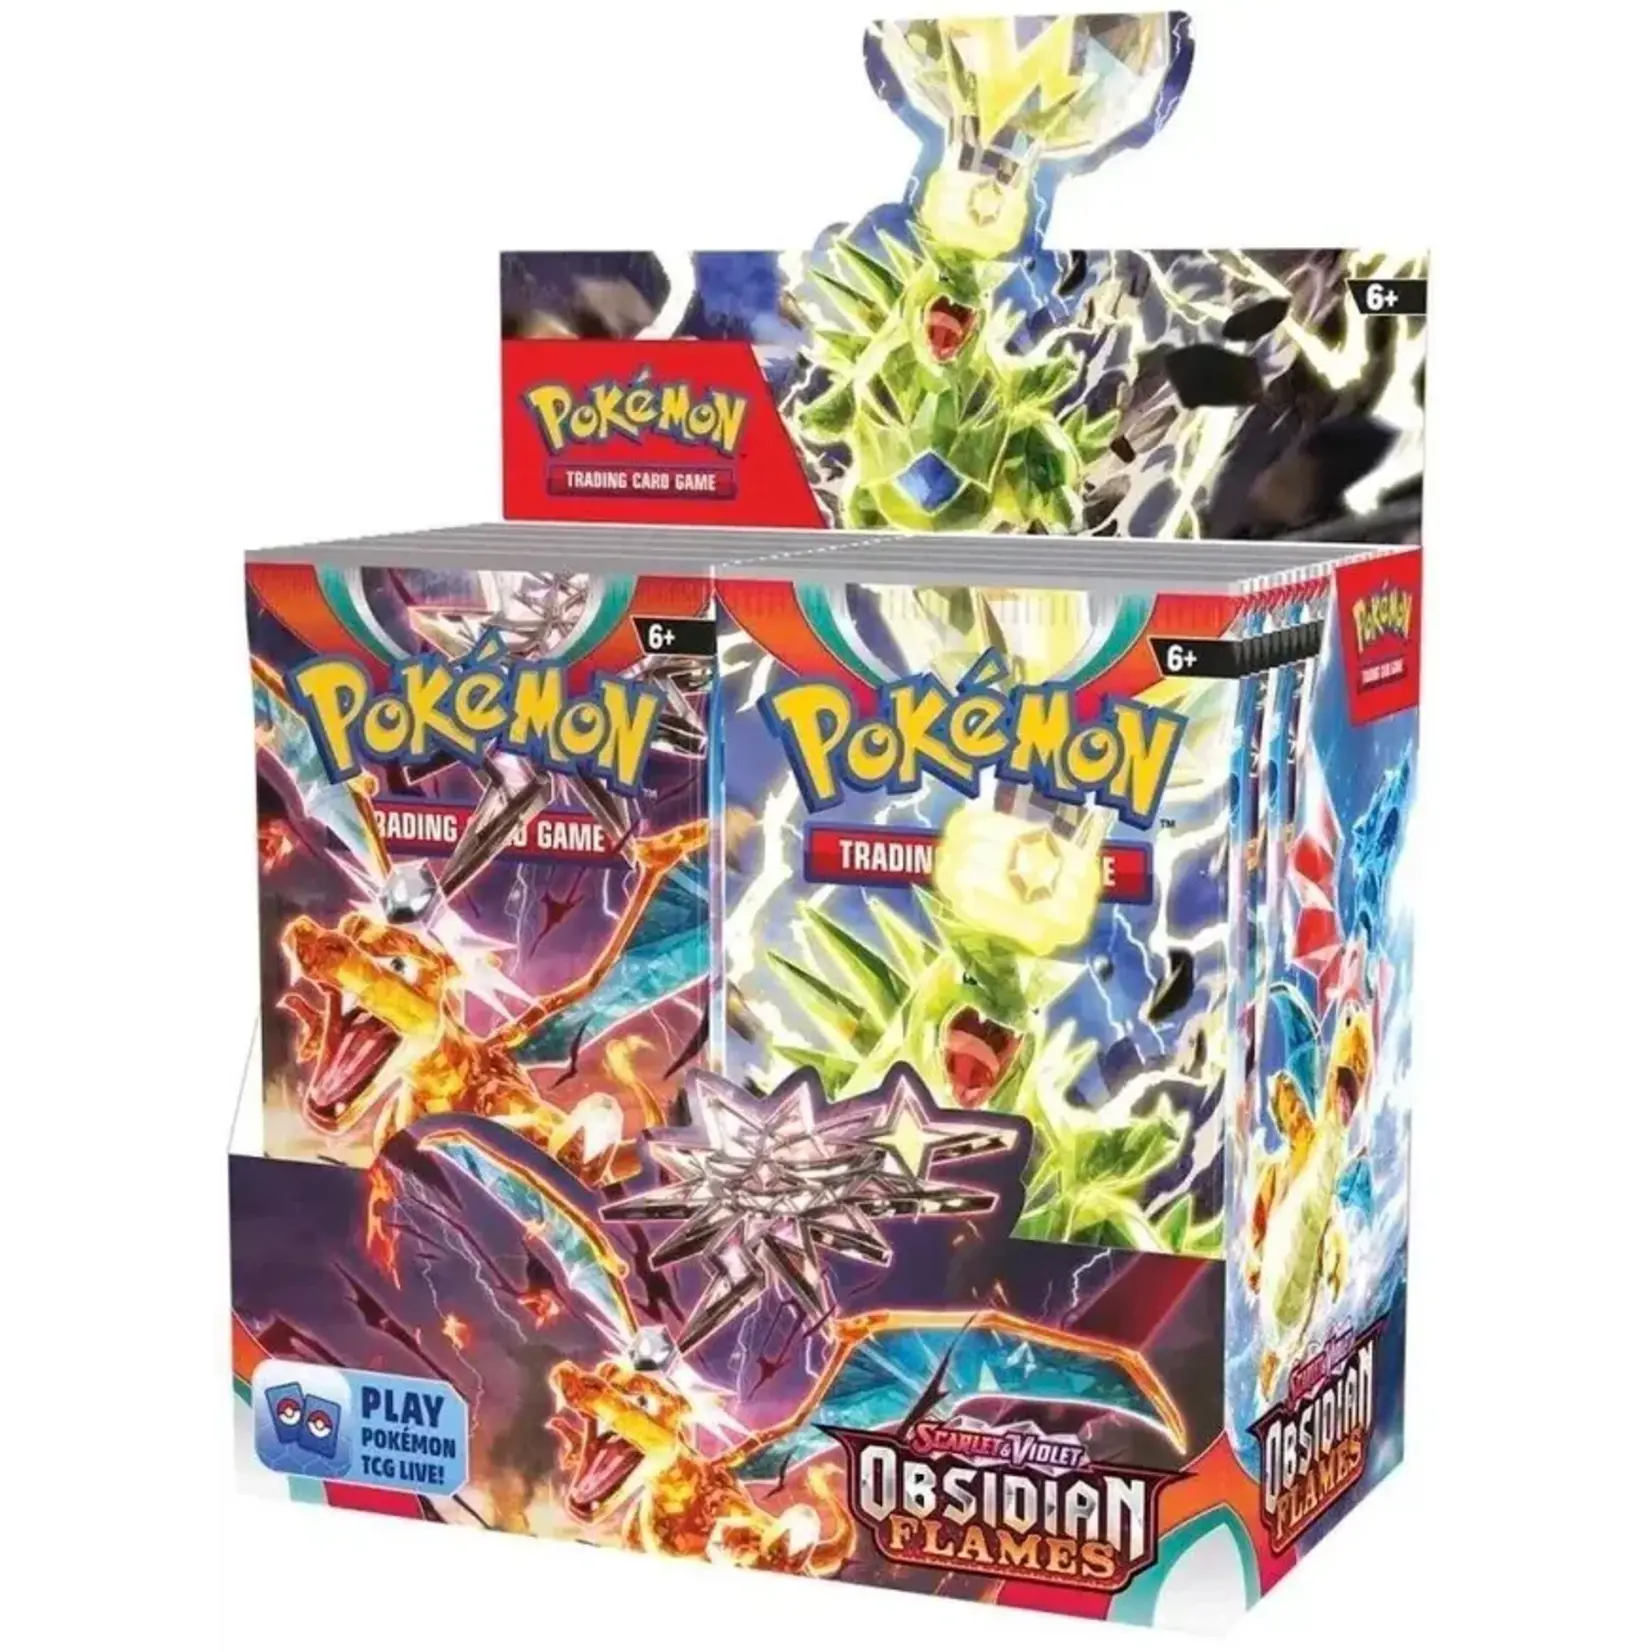 Pokémon Pokémon Trading Card Game: Obsidian Flames Booster Box